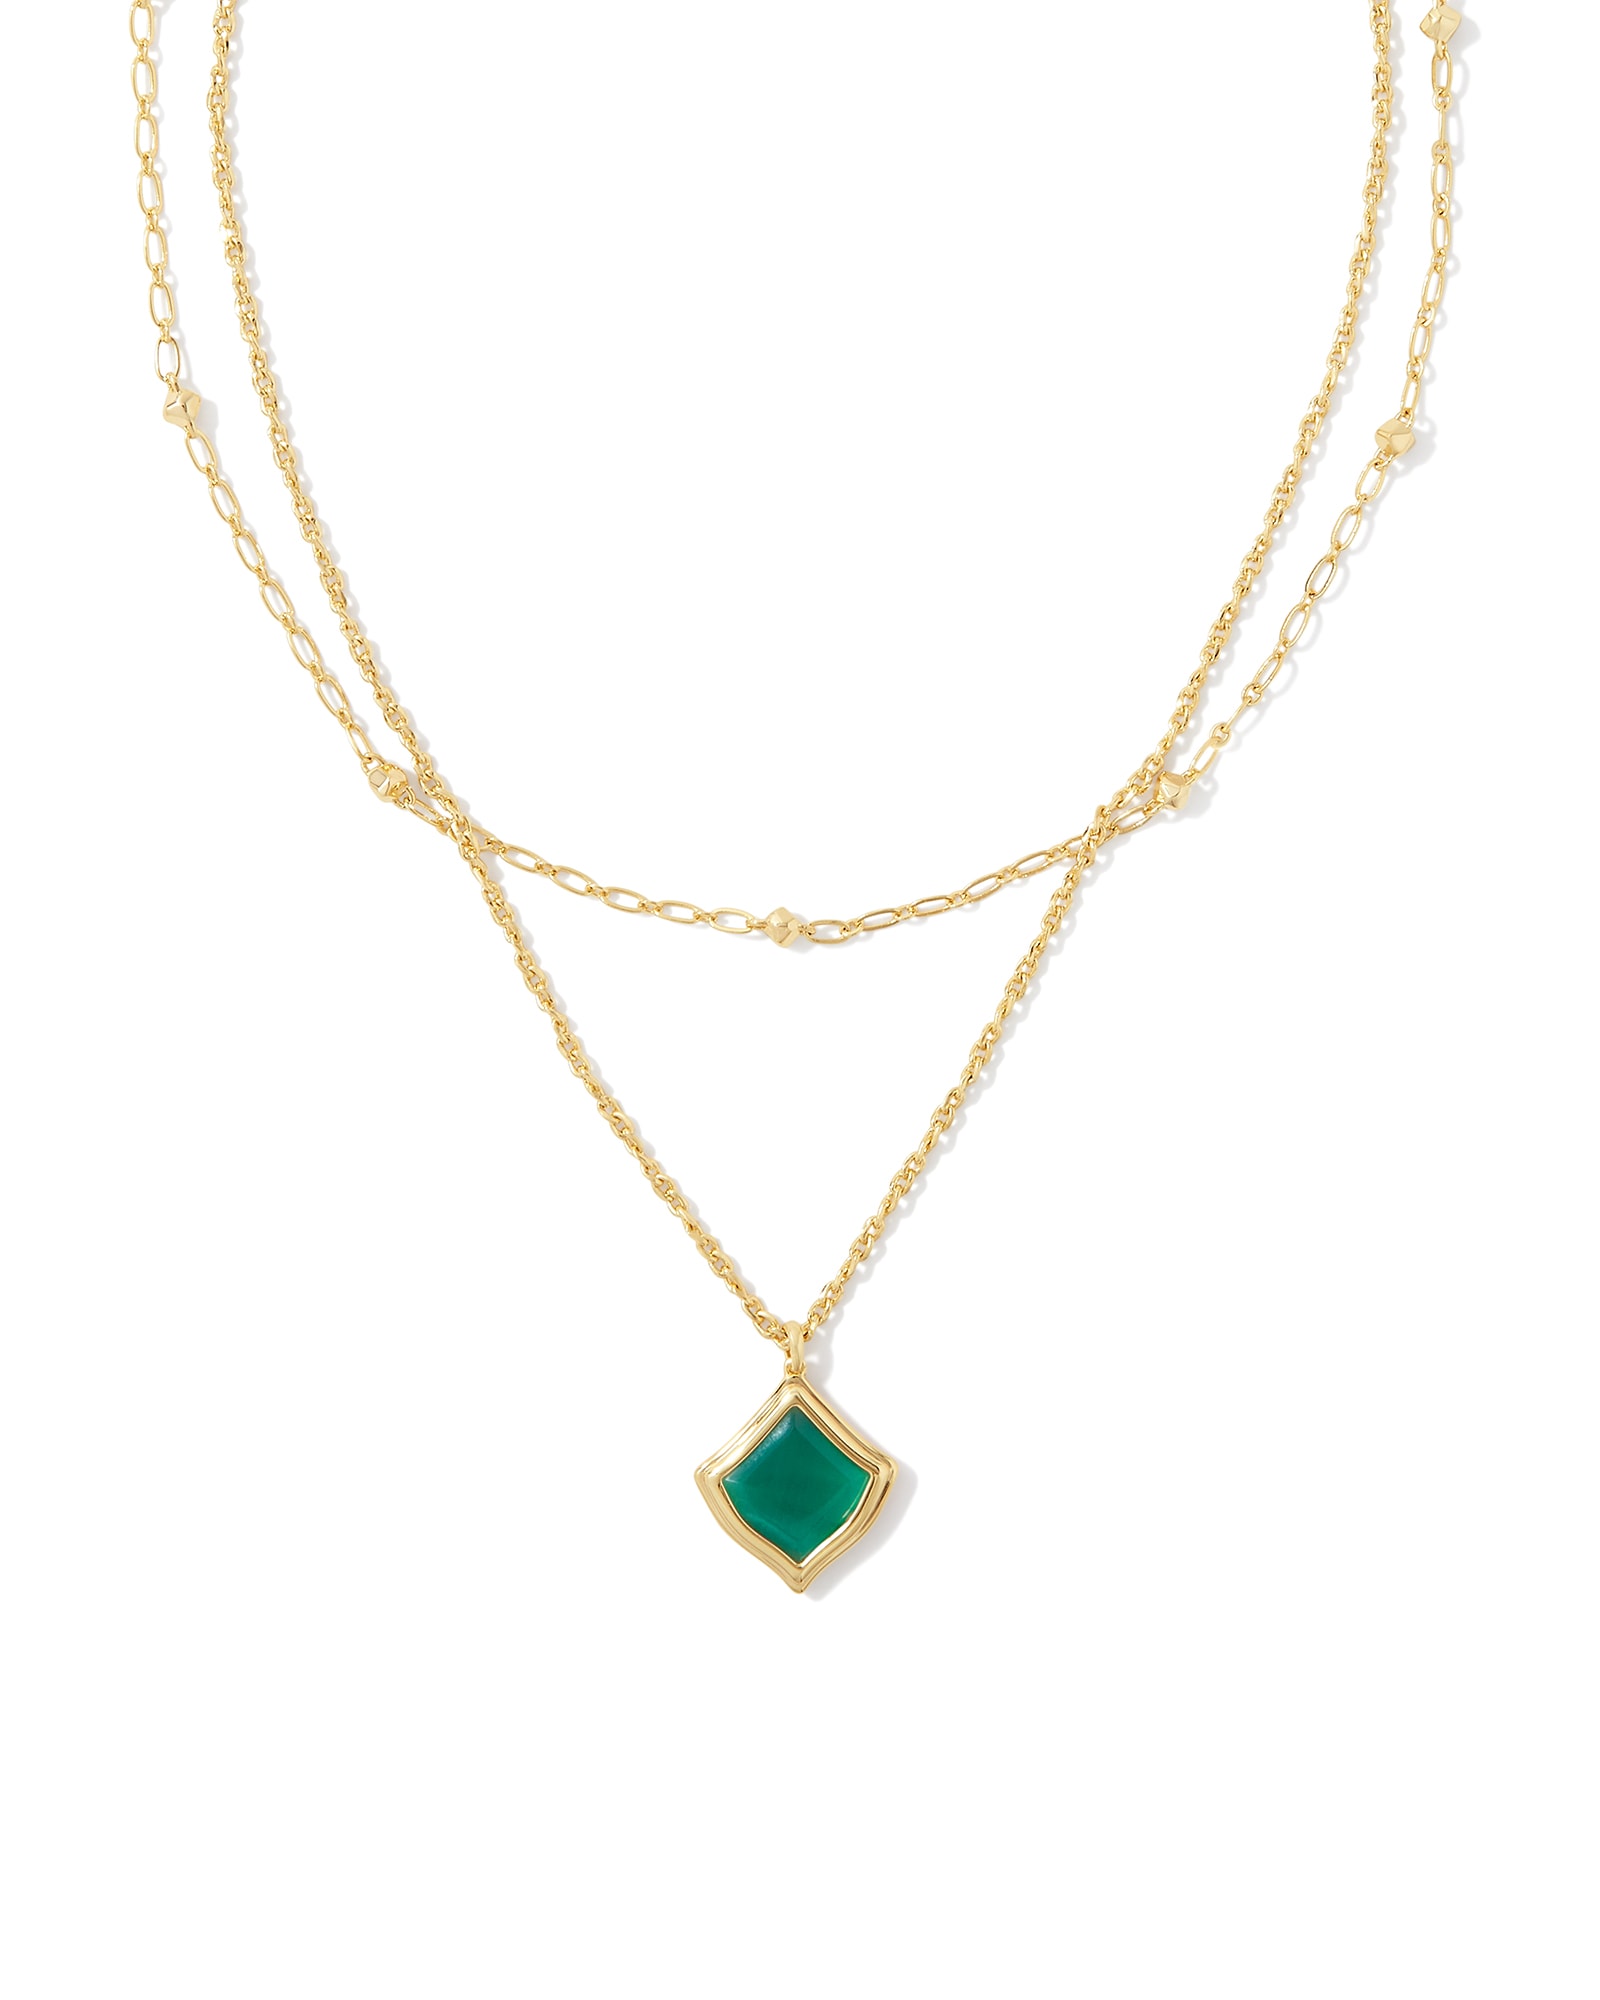 Kacey Gold Multi Strand Necklace in Emerald Cat's Eye | Kendra Scott